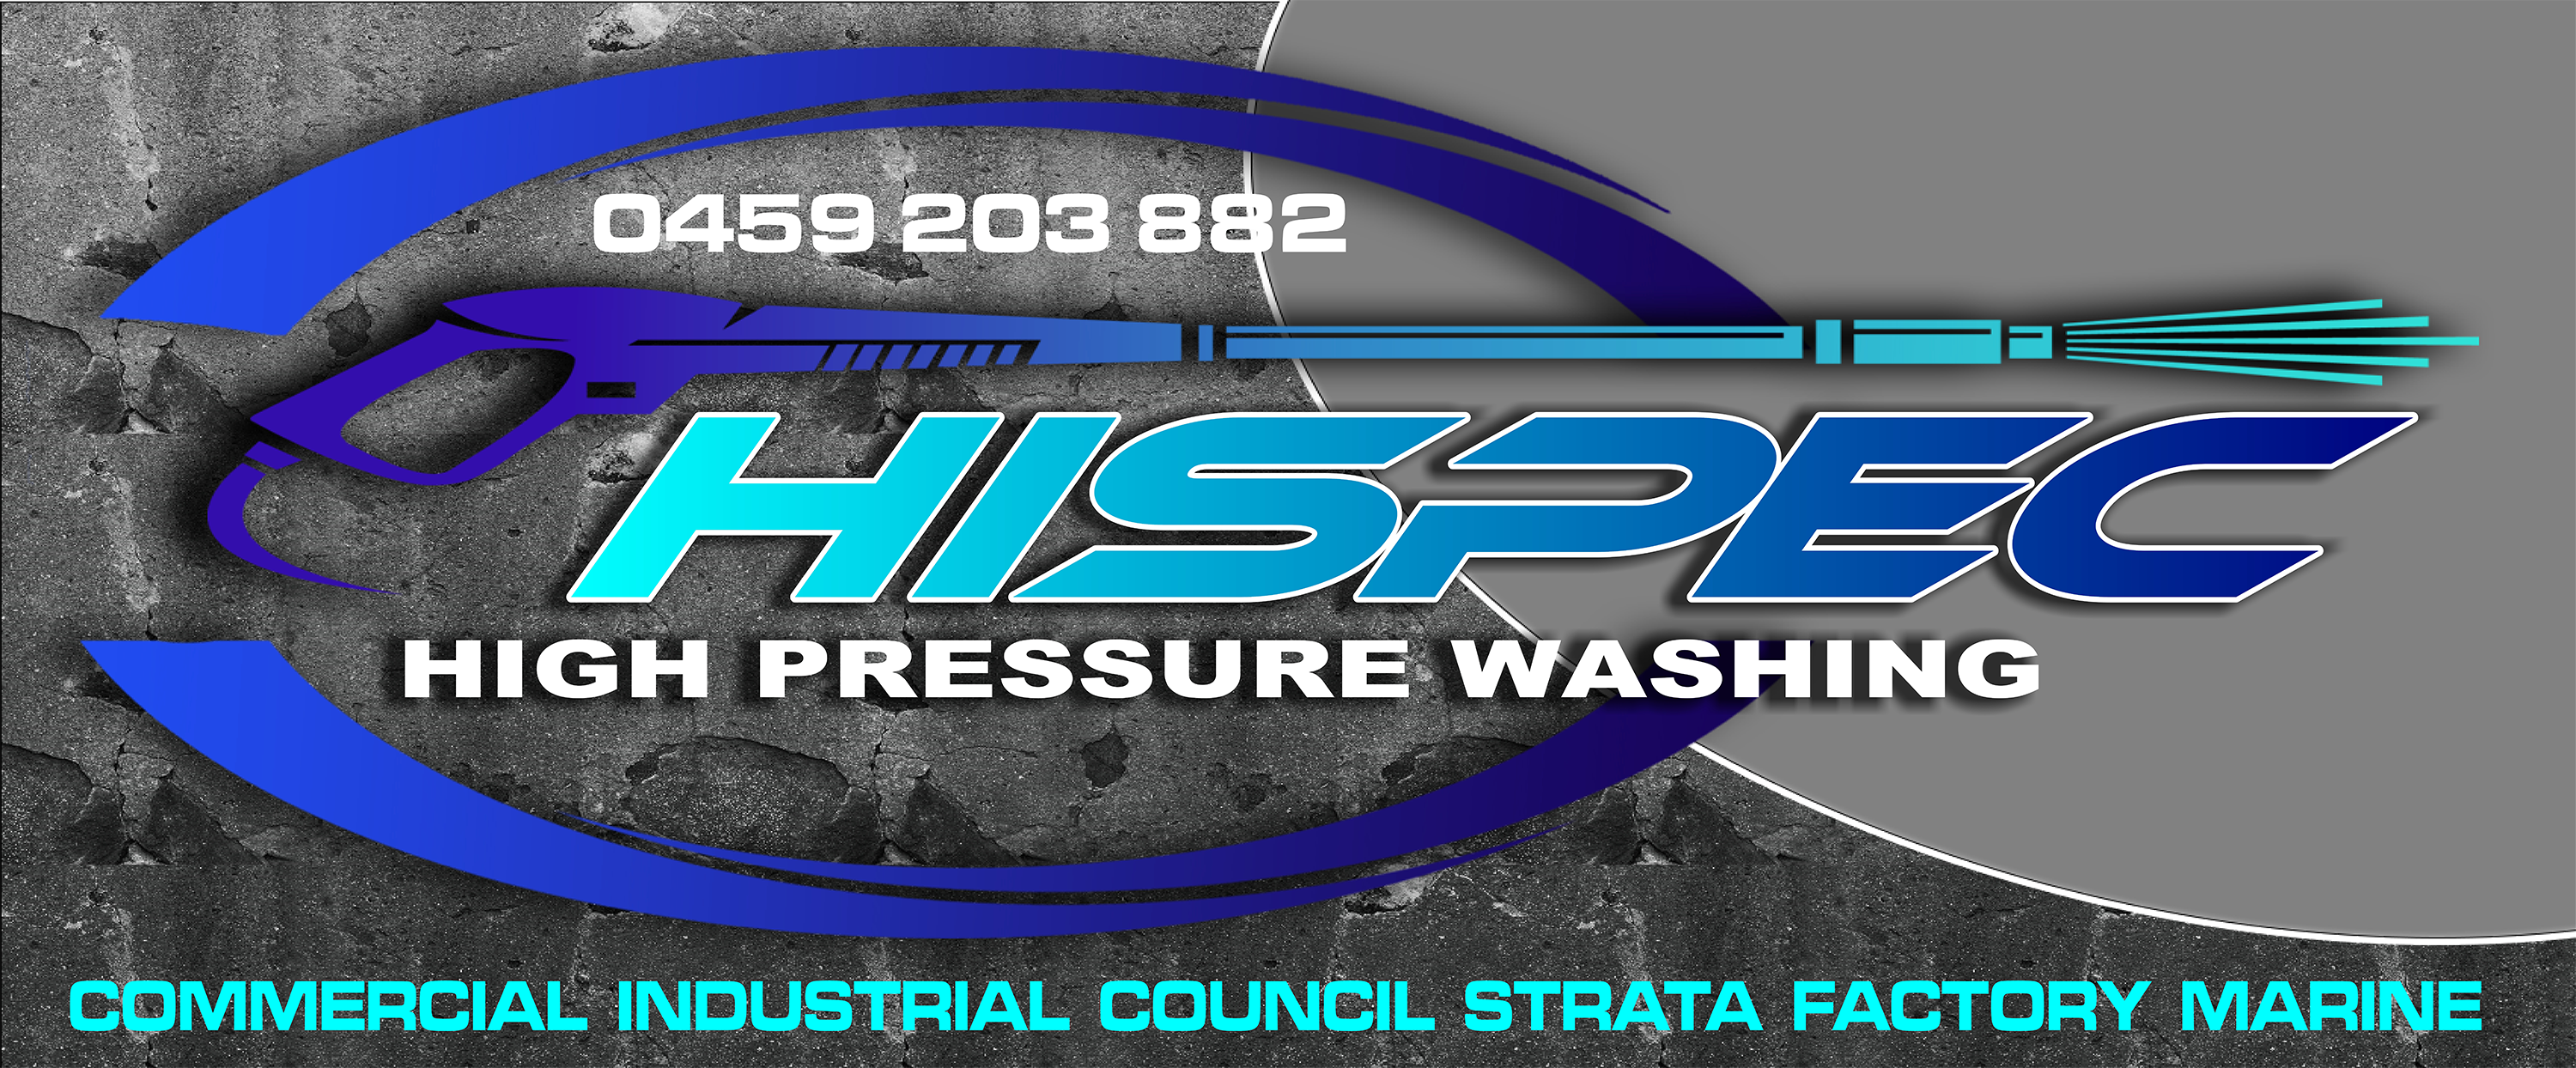 mandurah high pressure washing service